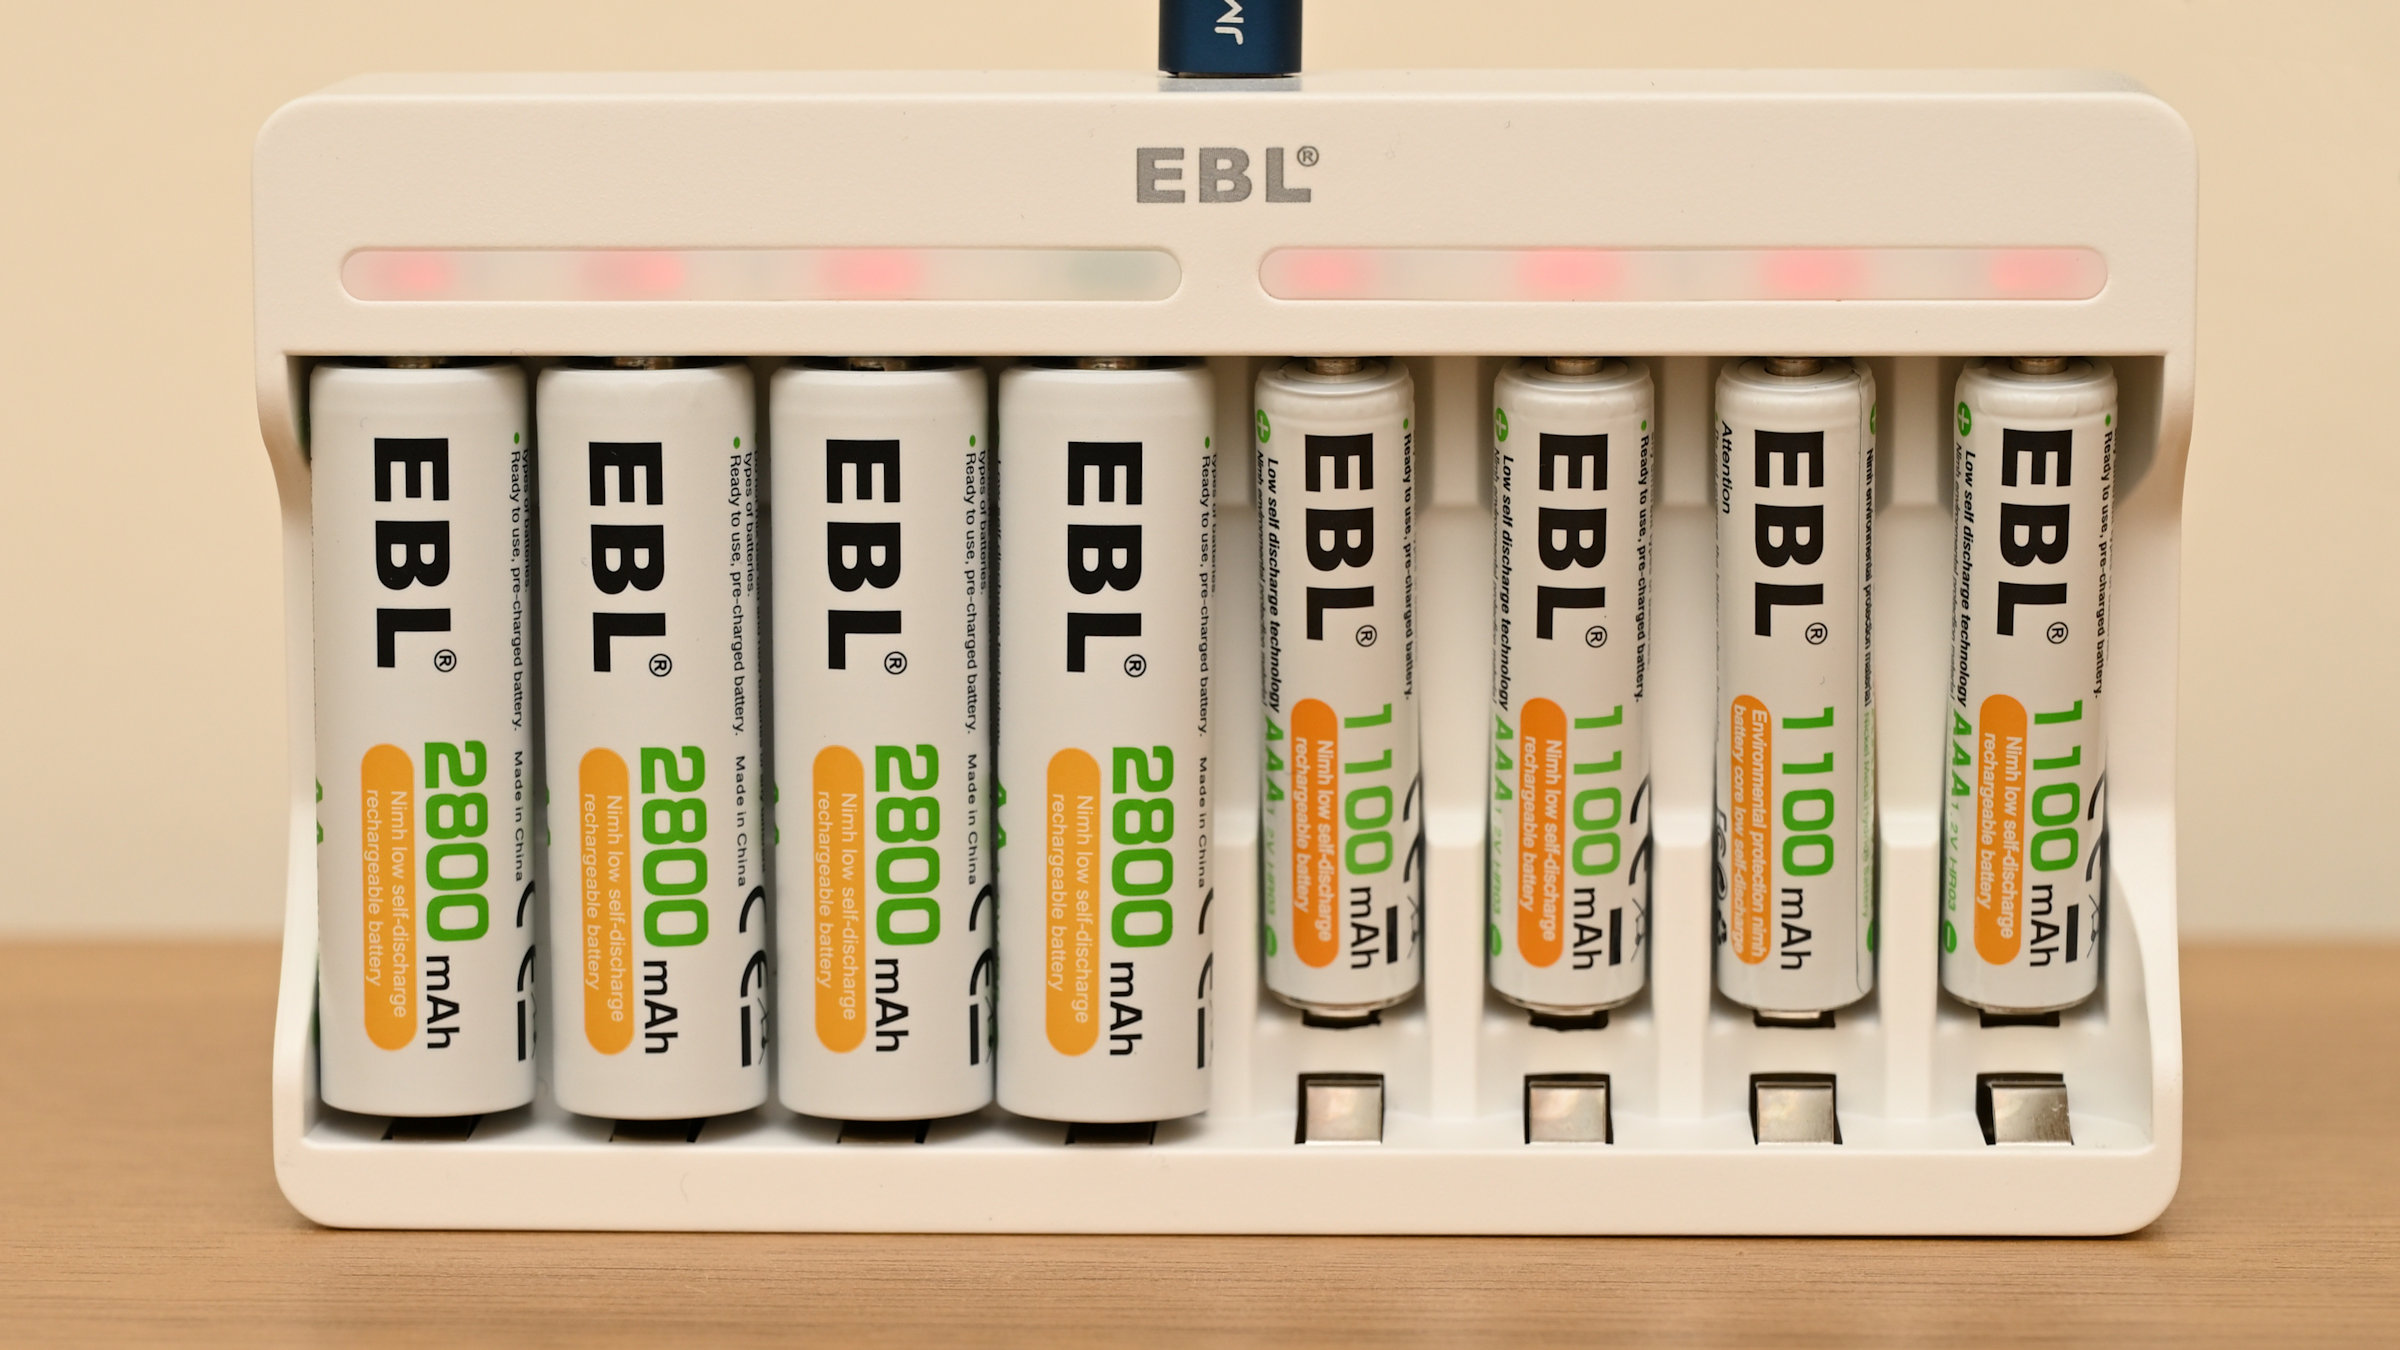 EBL Rechargeable AAA Batteries (4 Pack), 1100mAh Triple A